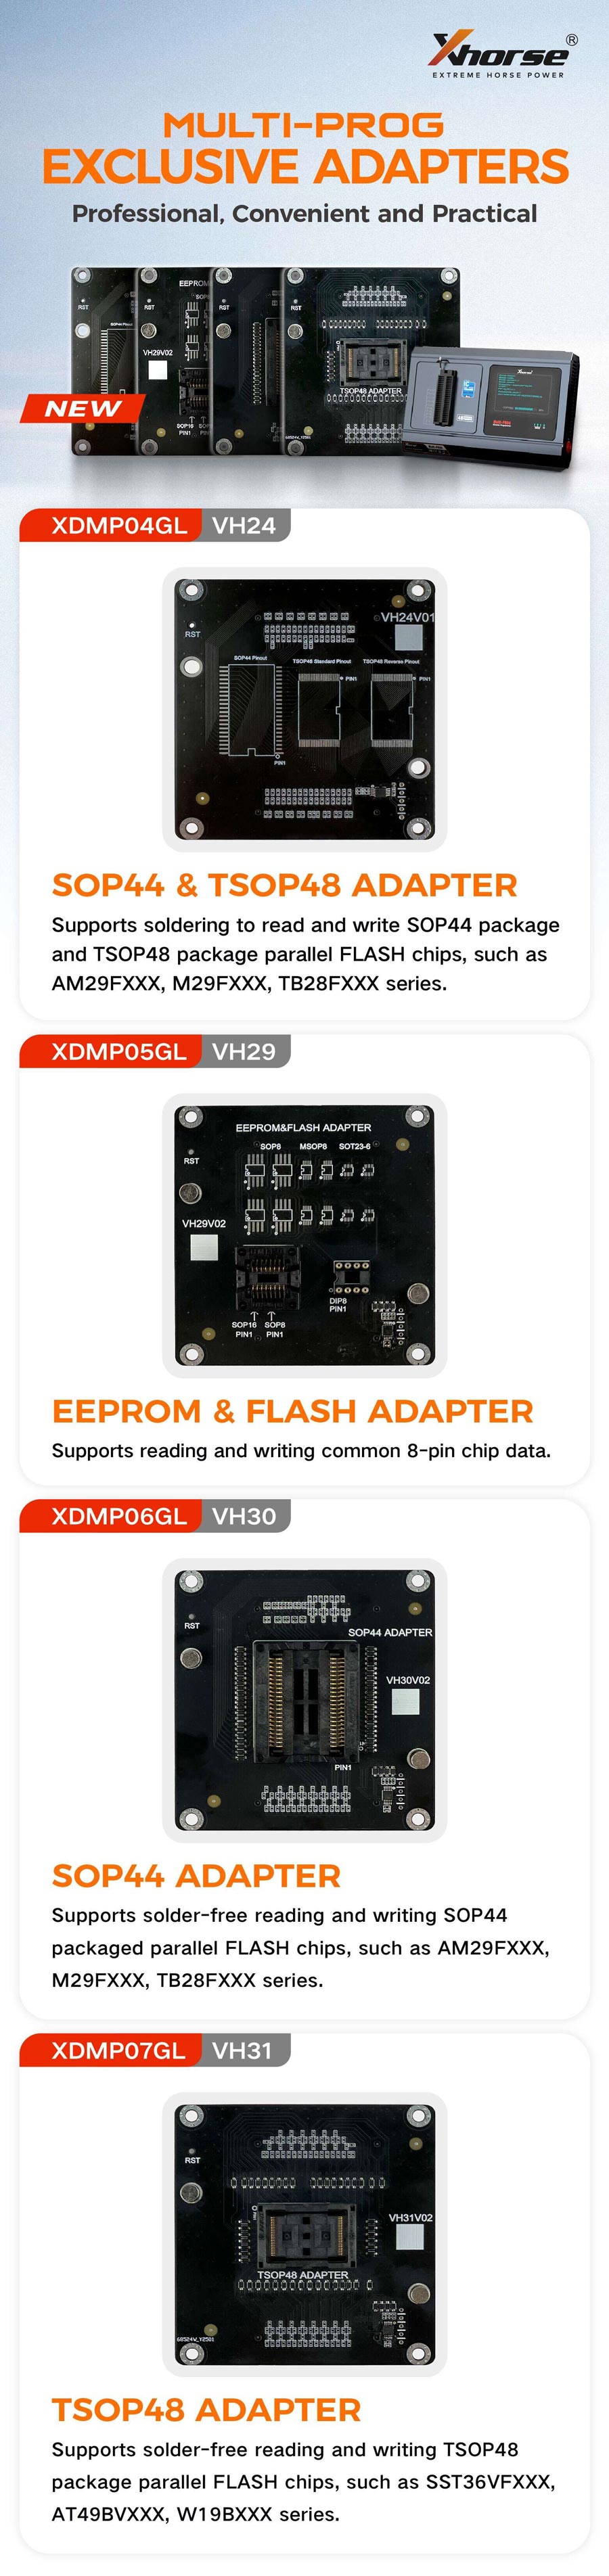 XHORSE XDMP07GL VH31 TSOP48 Solder Free Adapter